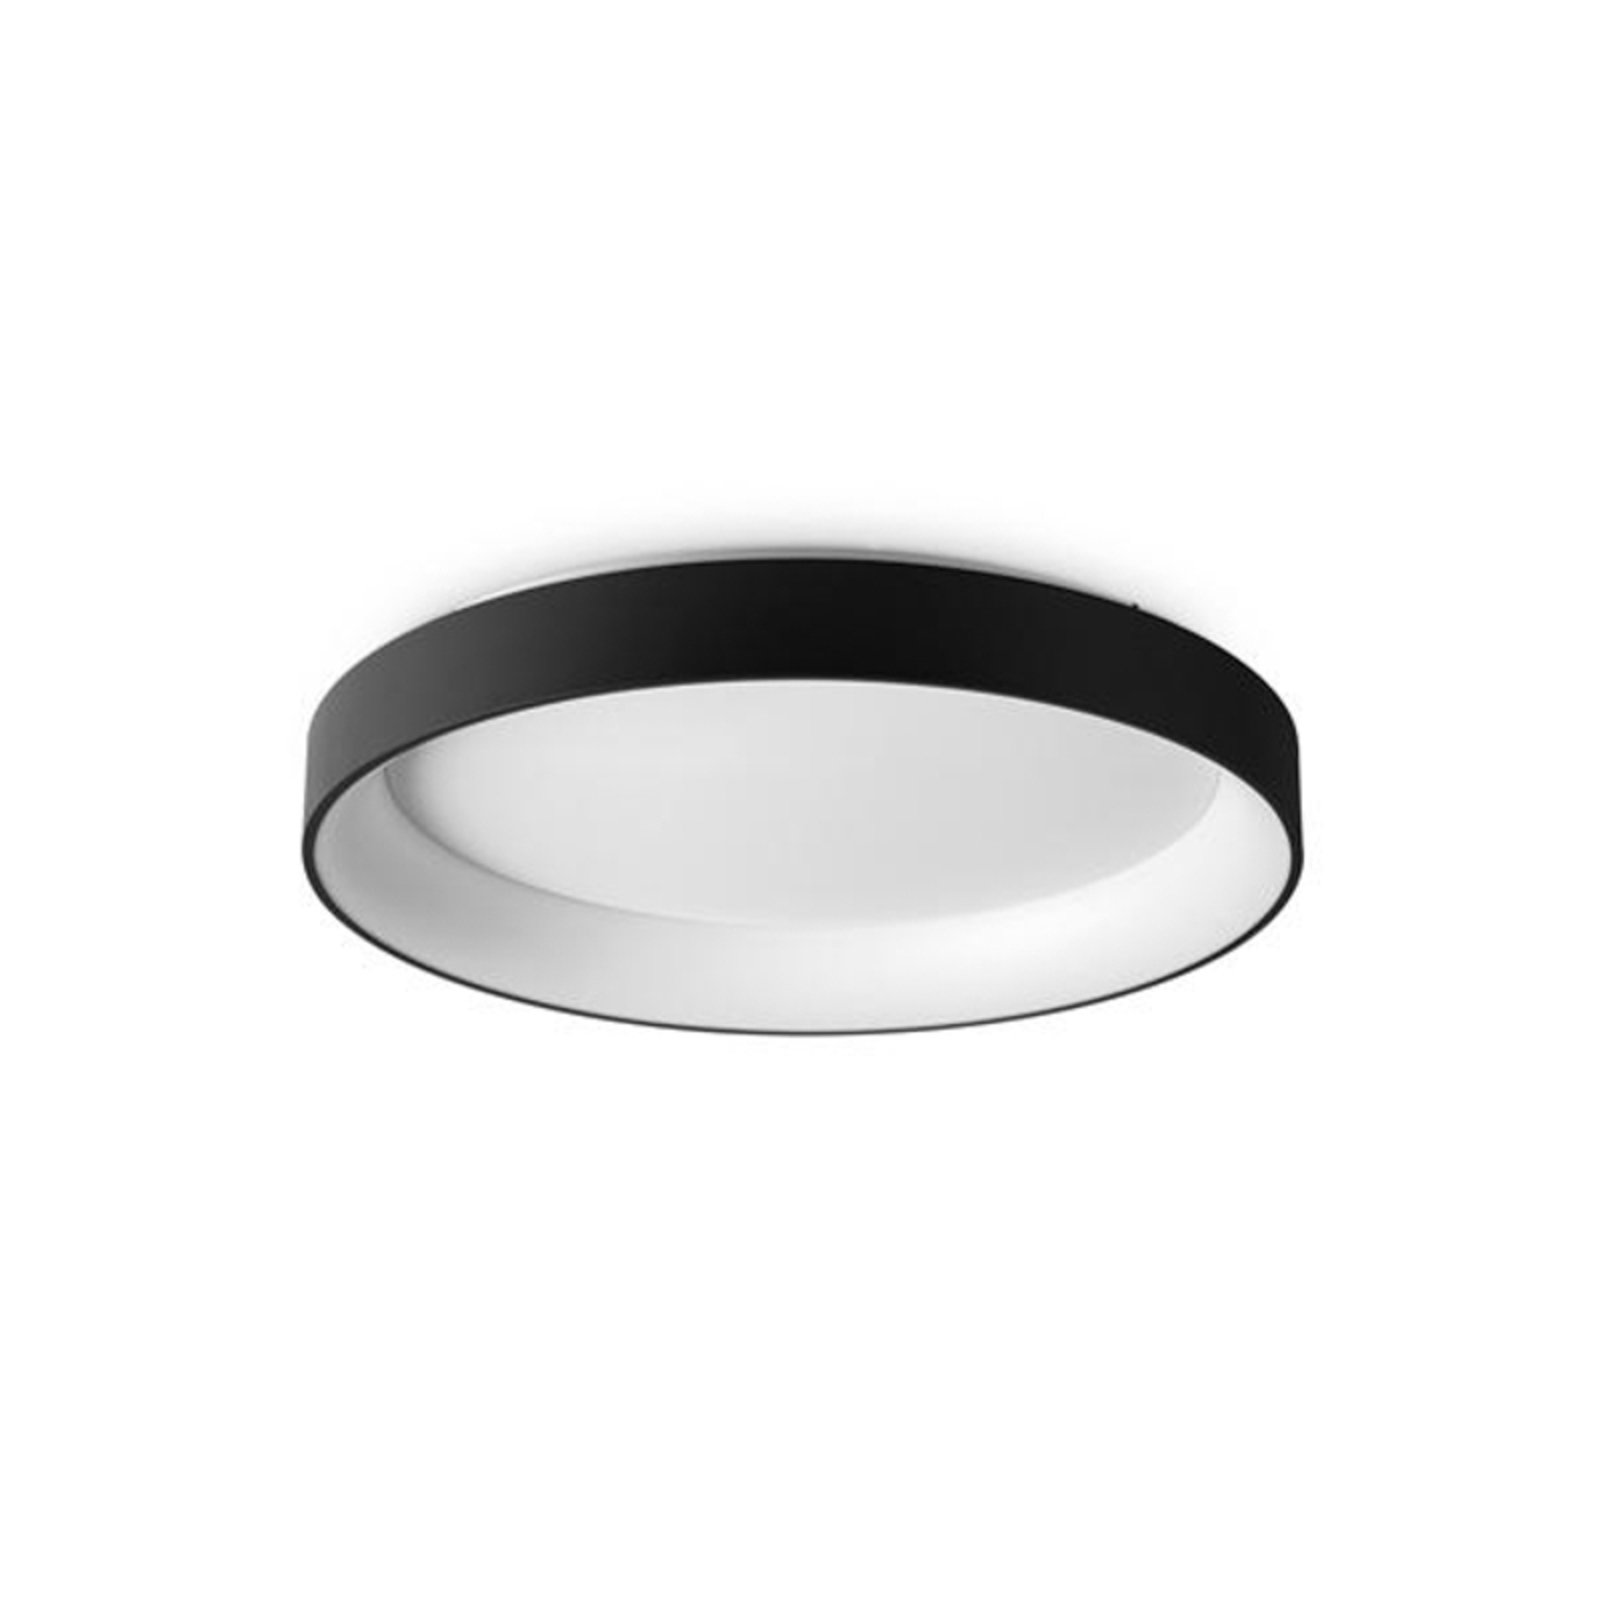 Ideal Lux LED ceiling light Ziggy, black, Ø 80 cm, metal